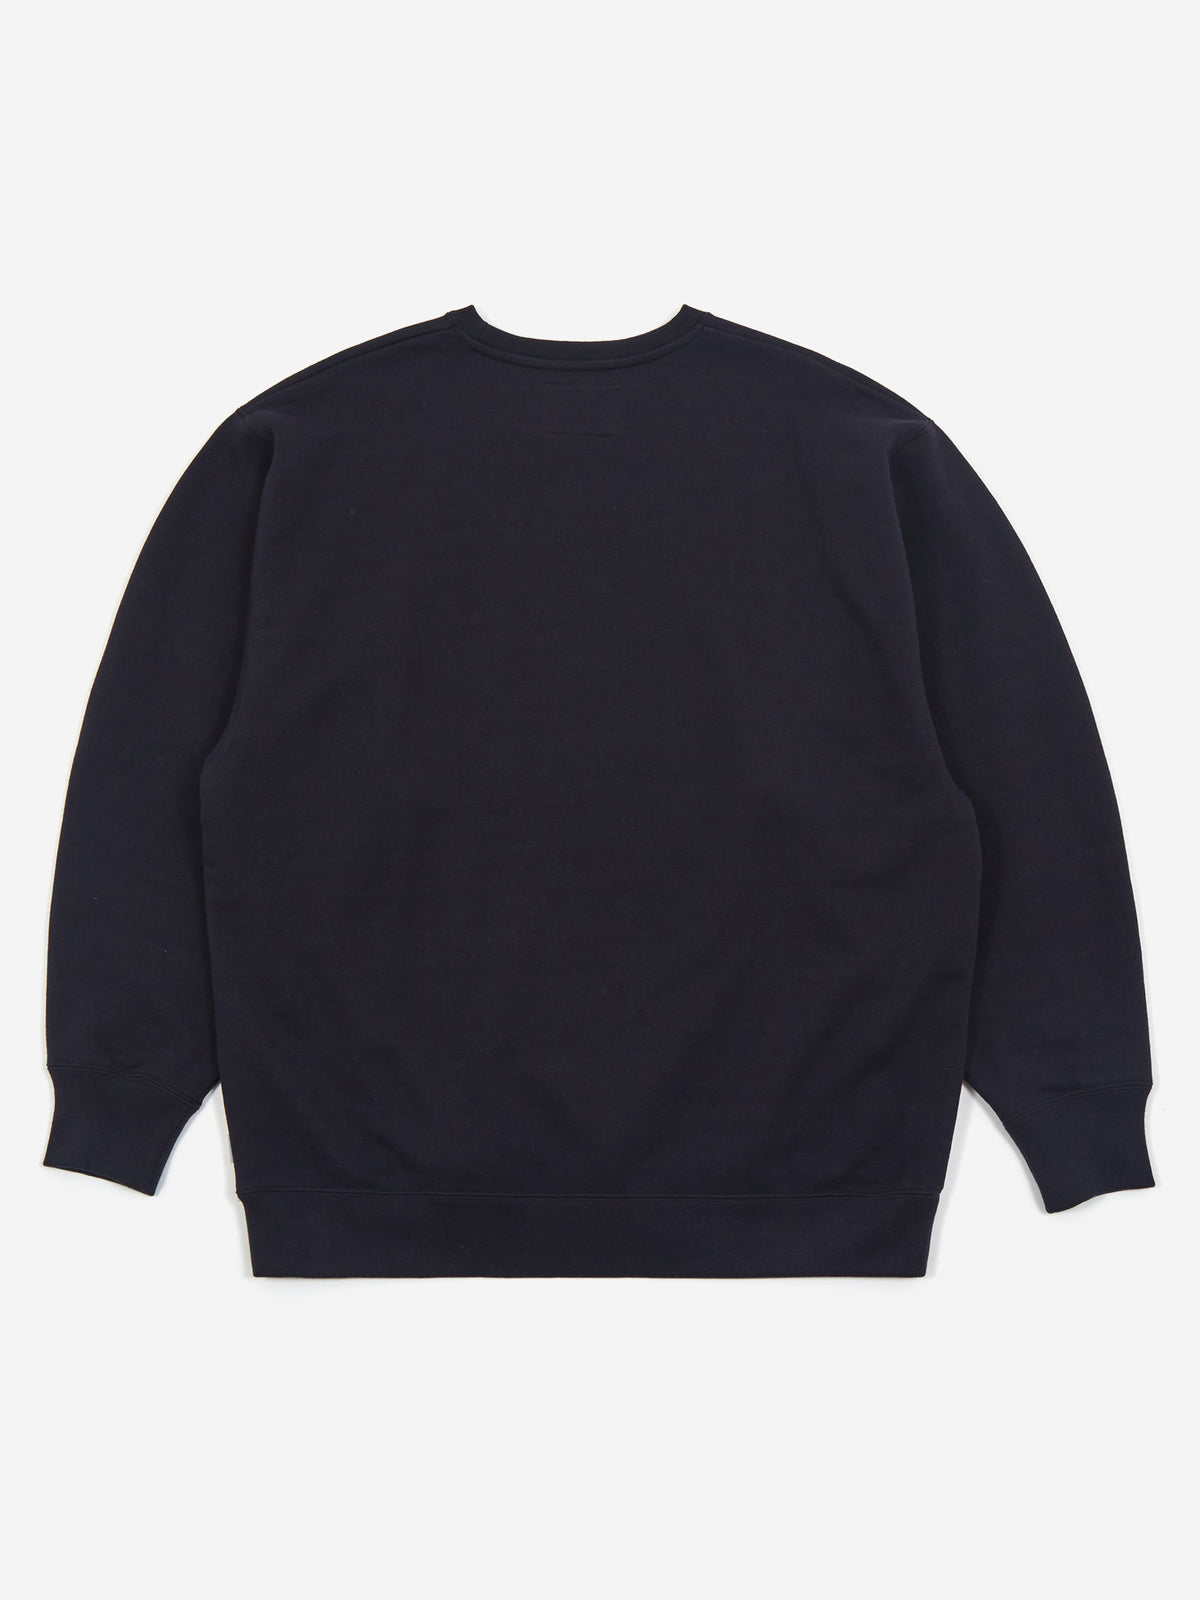 WTAPS Design 01 / Sweater / Cotton. College - Navy WTAPS Now is